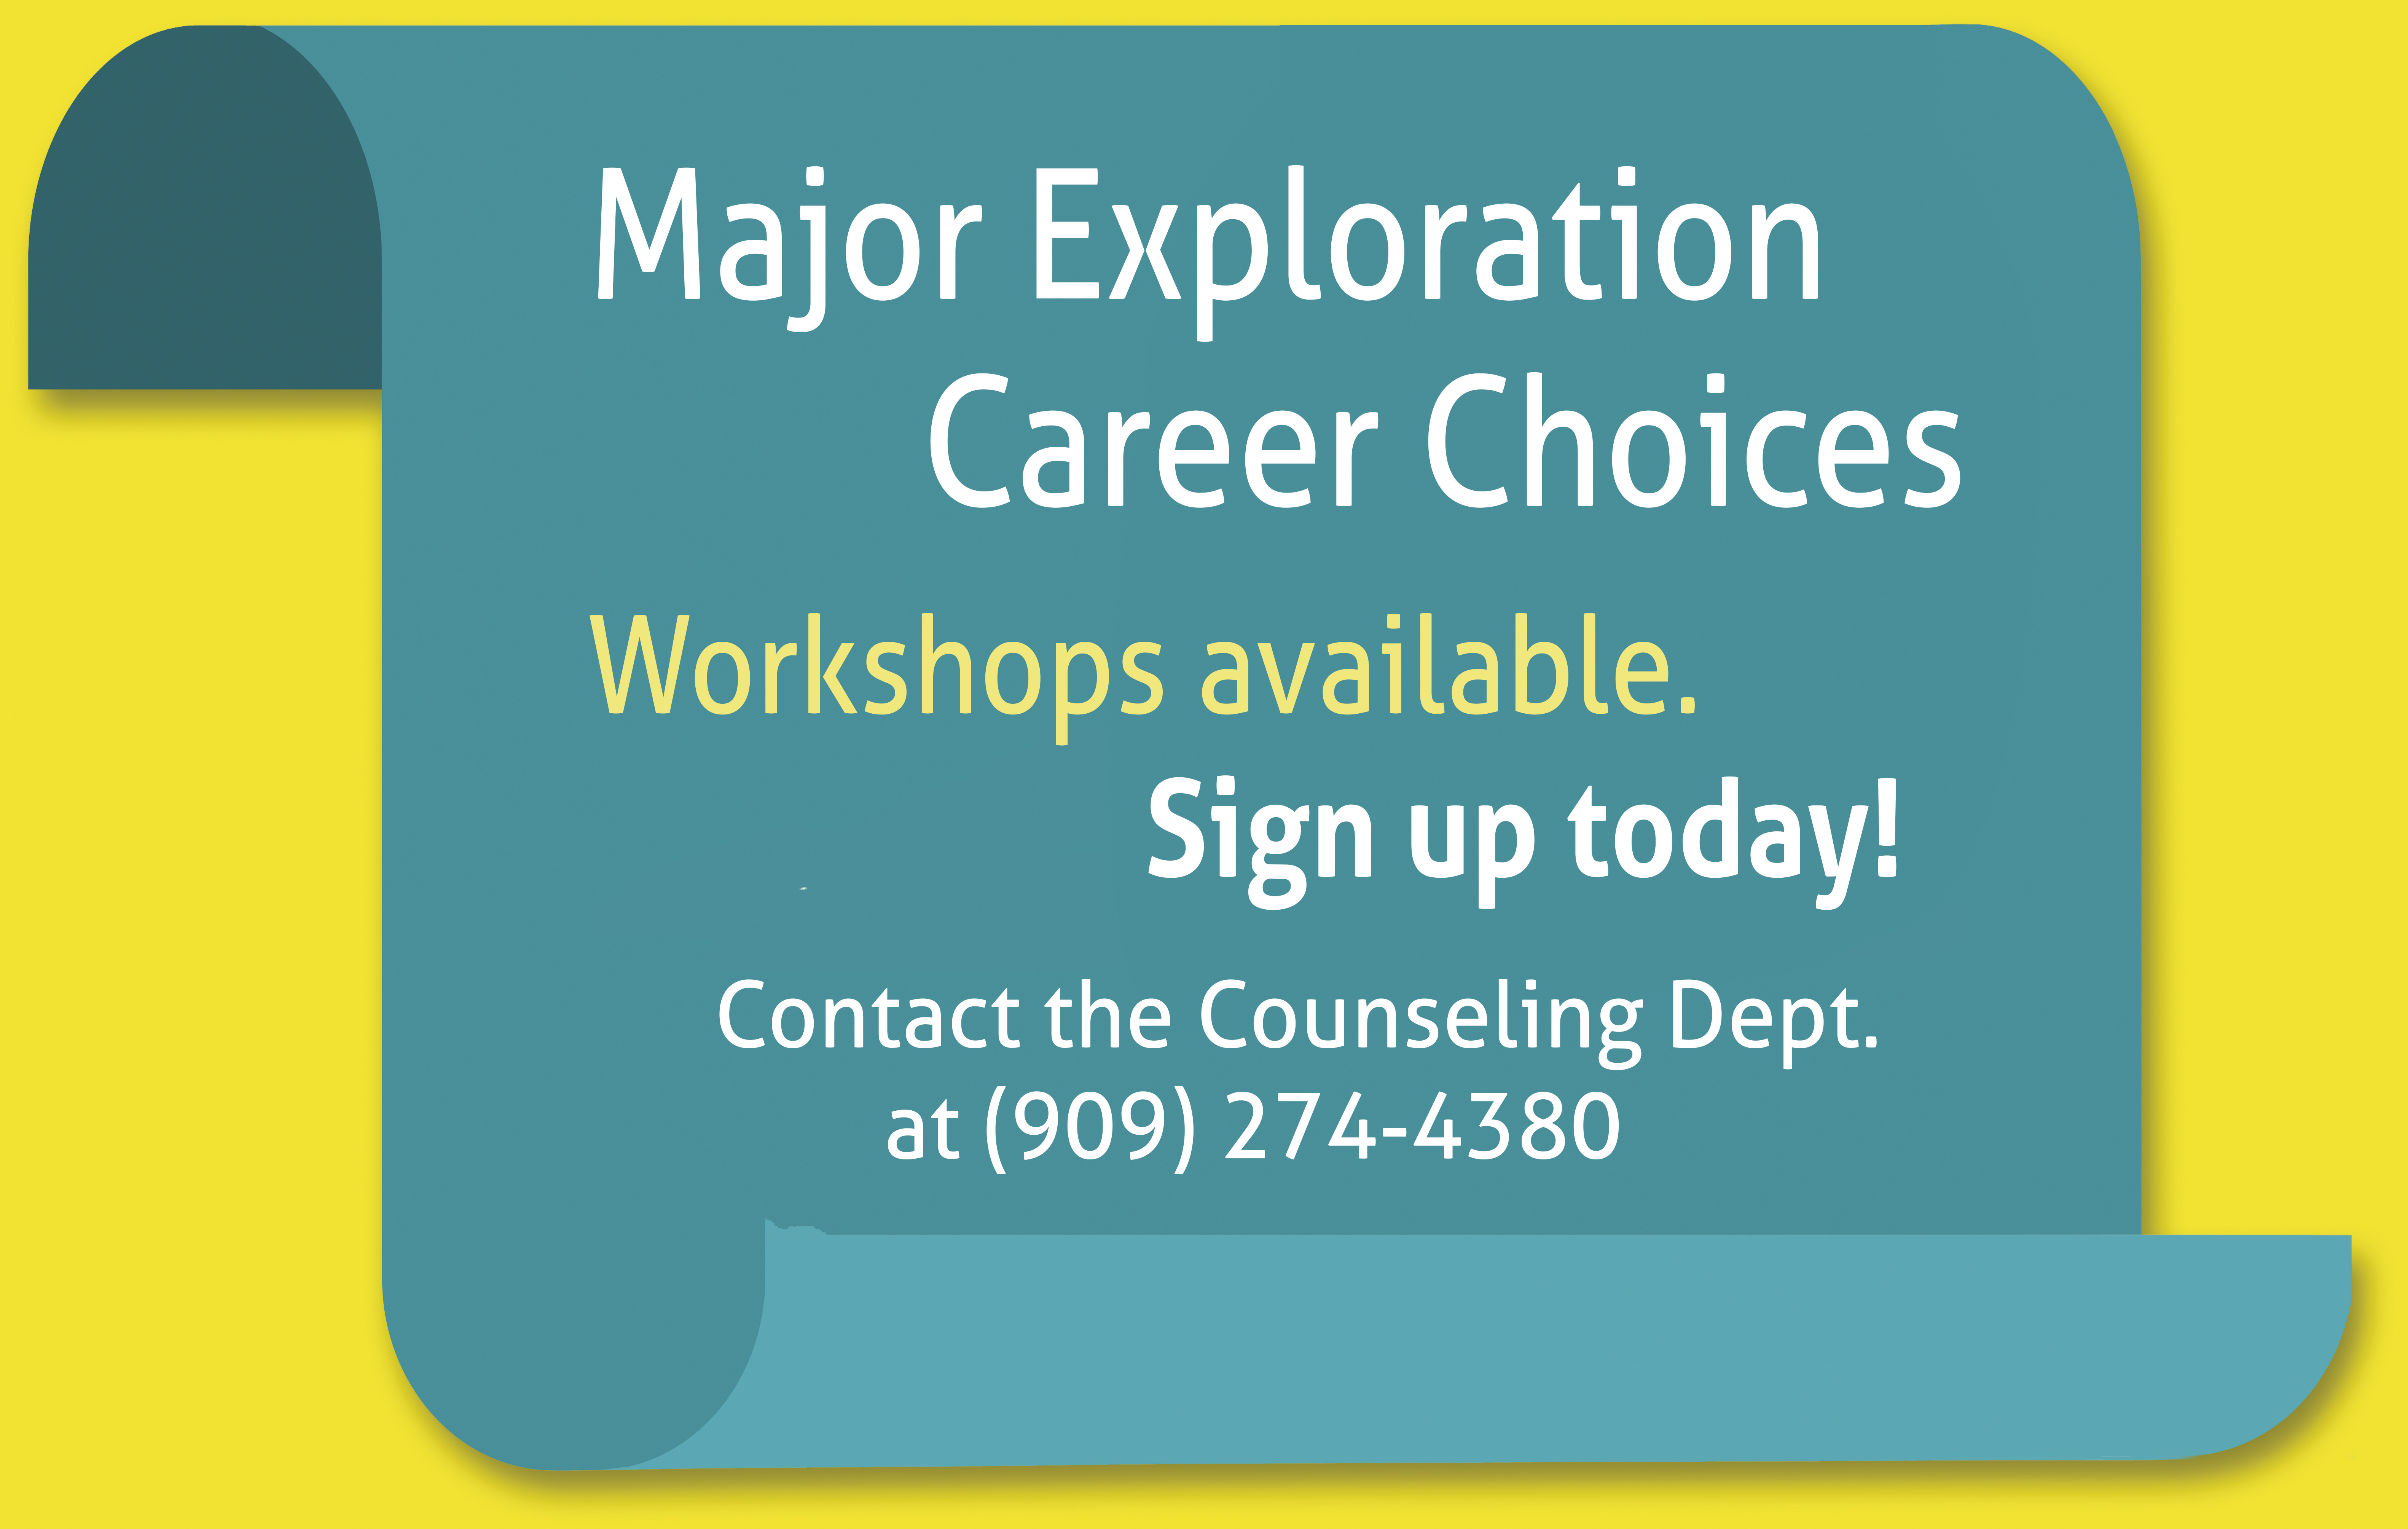 Major Exploration Career Choice Workshops